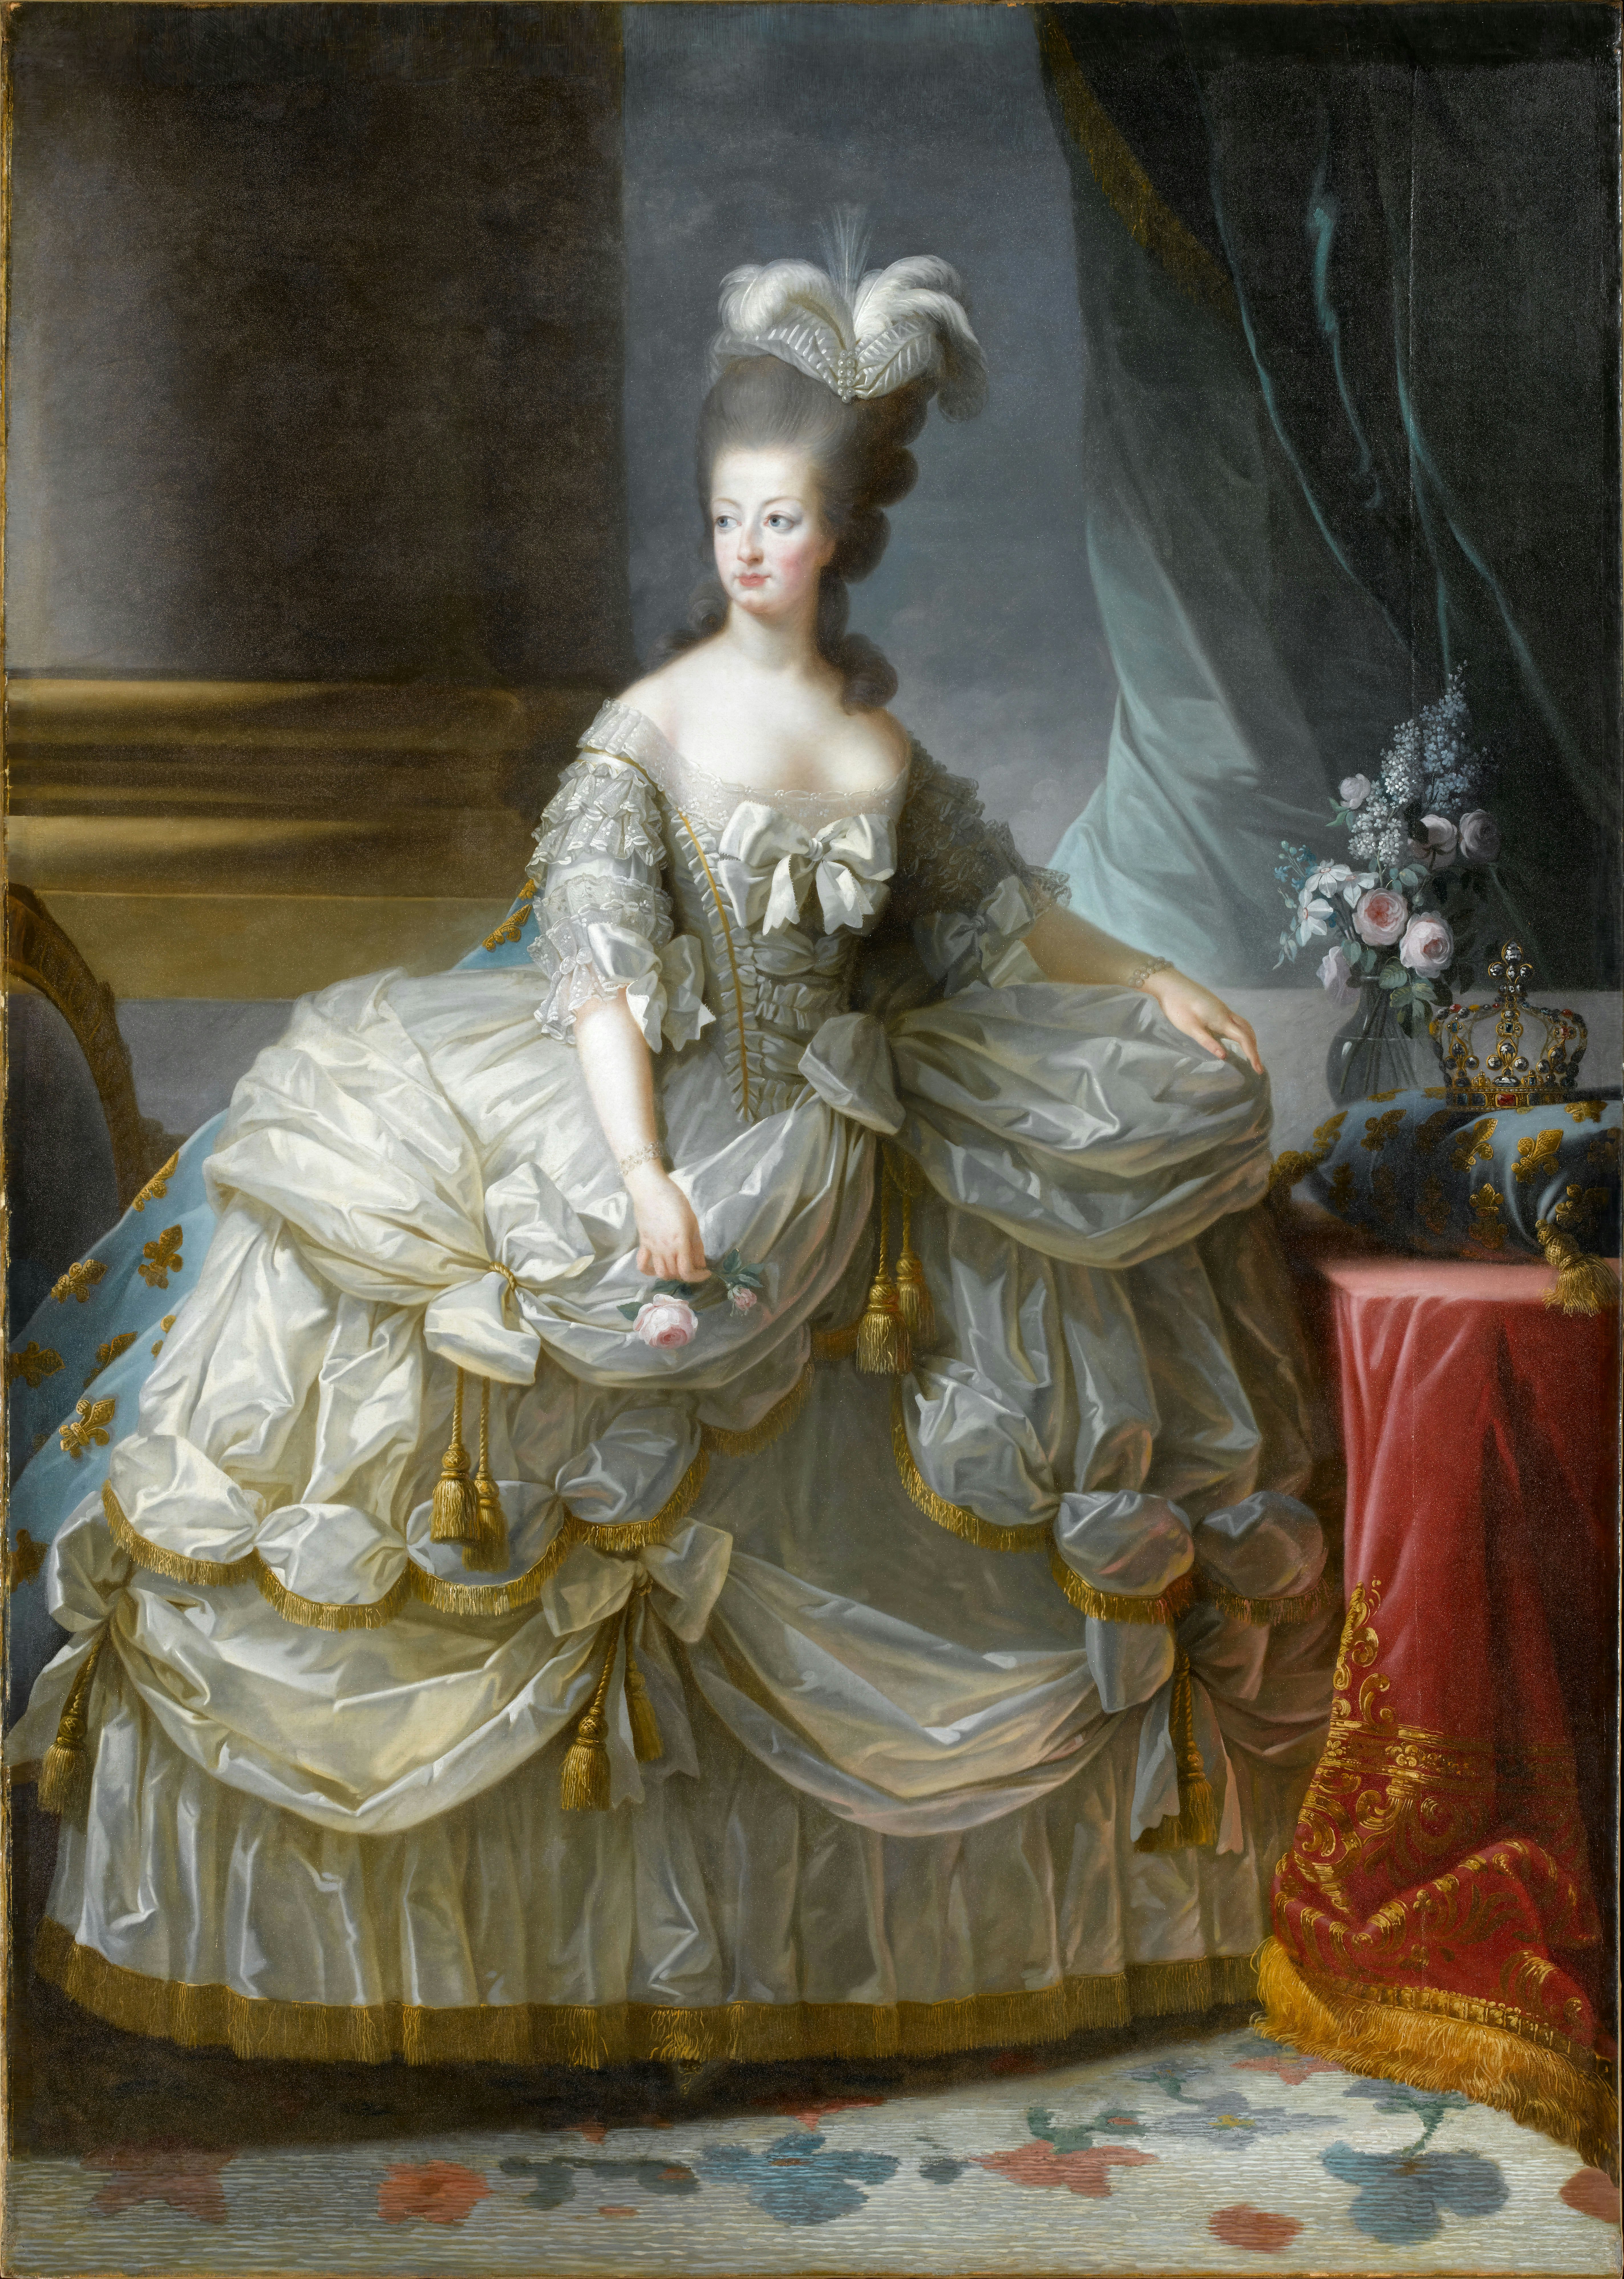 An 18th-century portrait of Marie-Antoinett